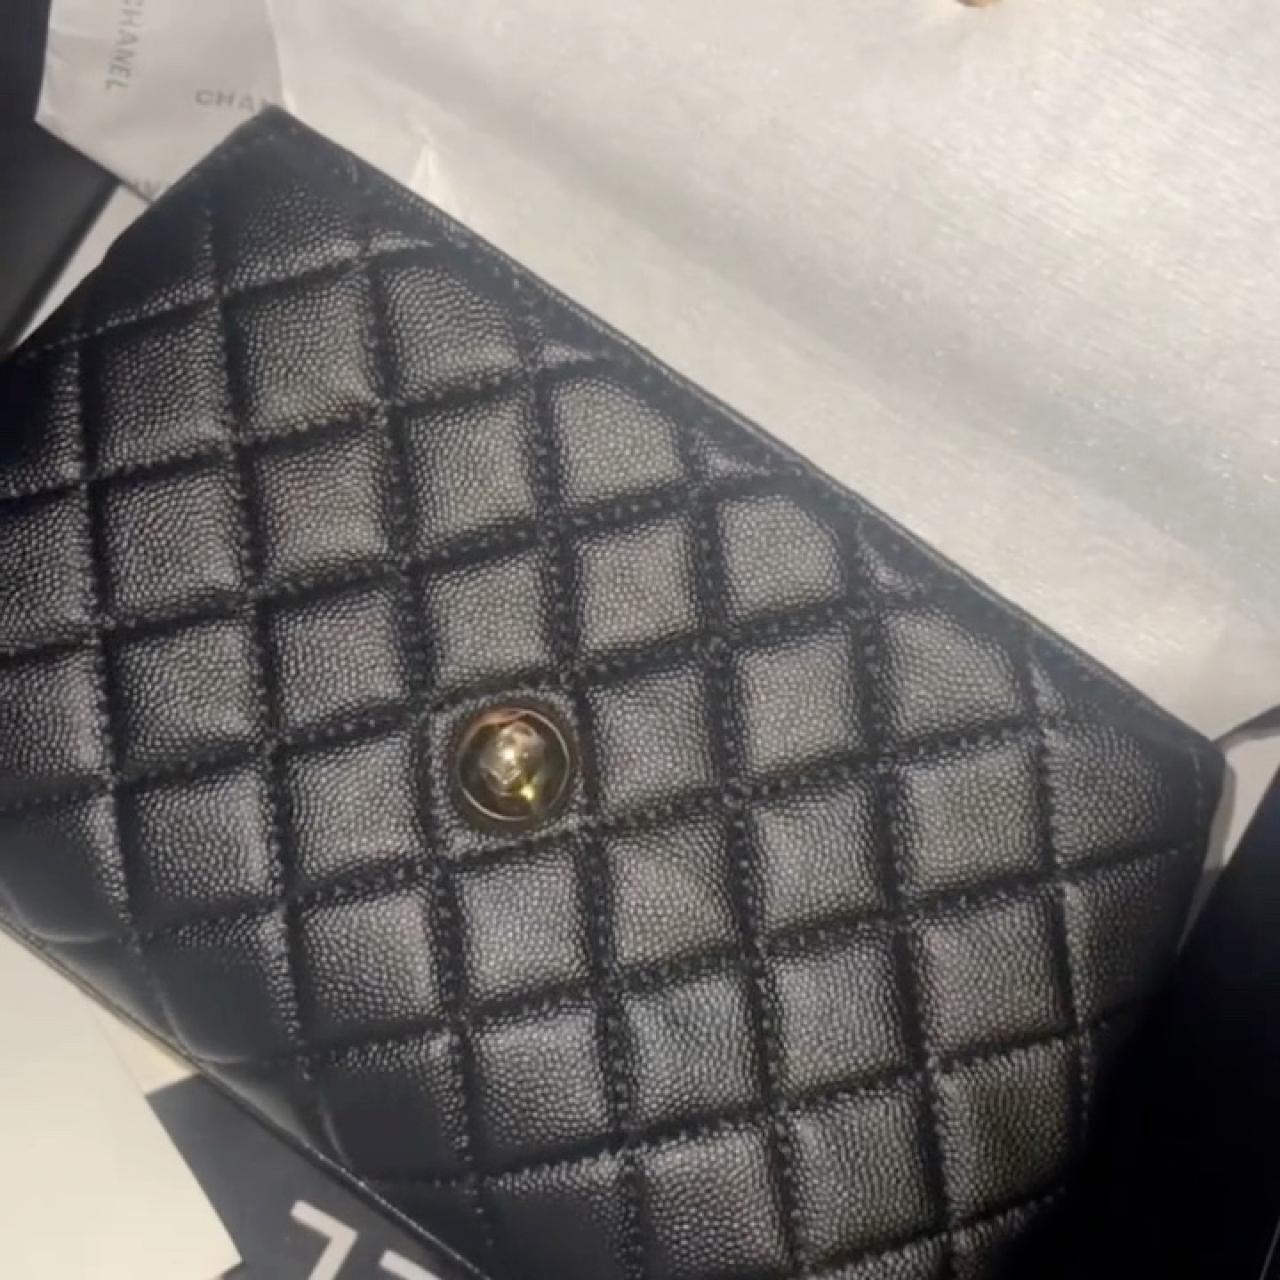 Chanel Lizard Embossed Mini Handbag #chanel - Depop